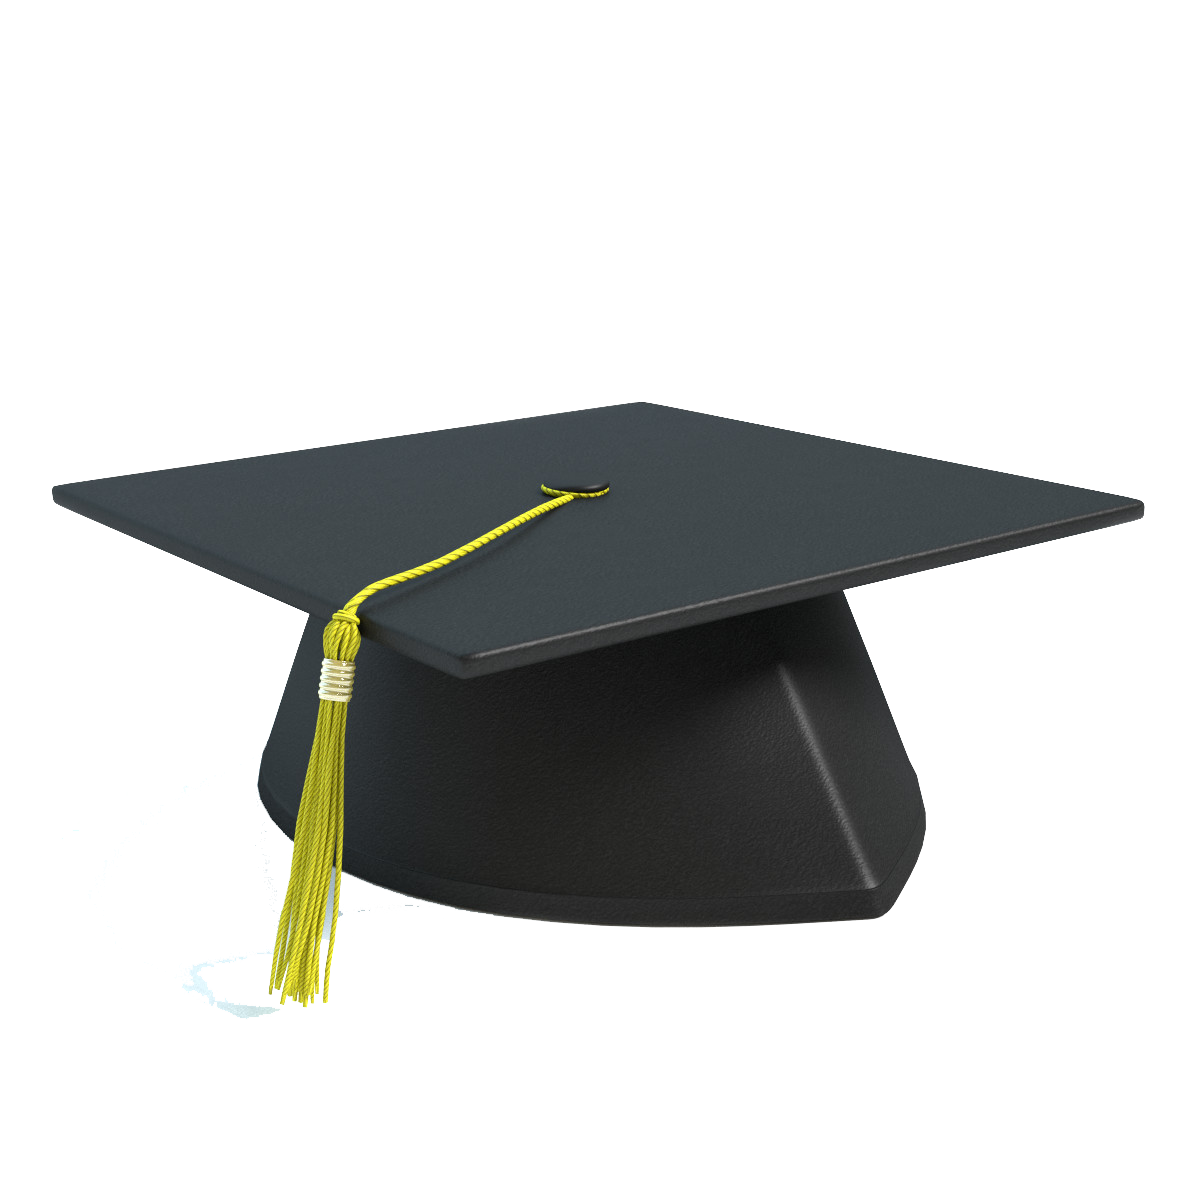 graduation-cap-template-free-download